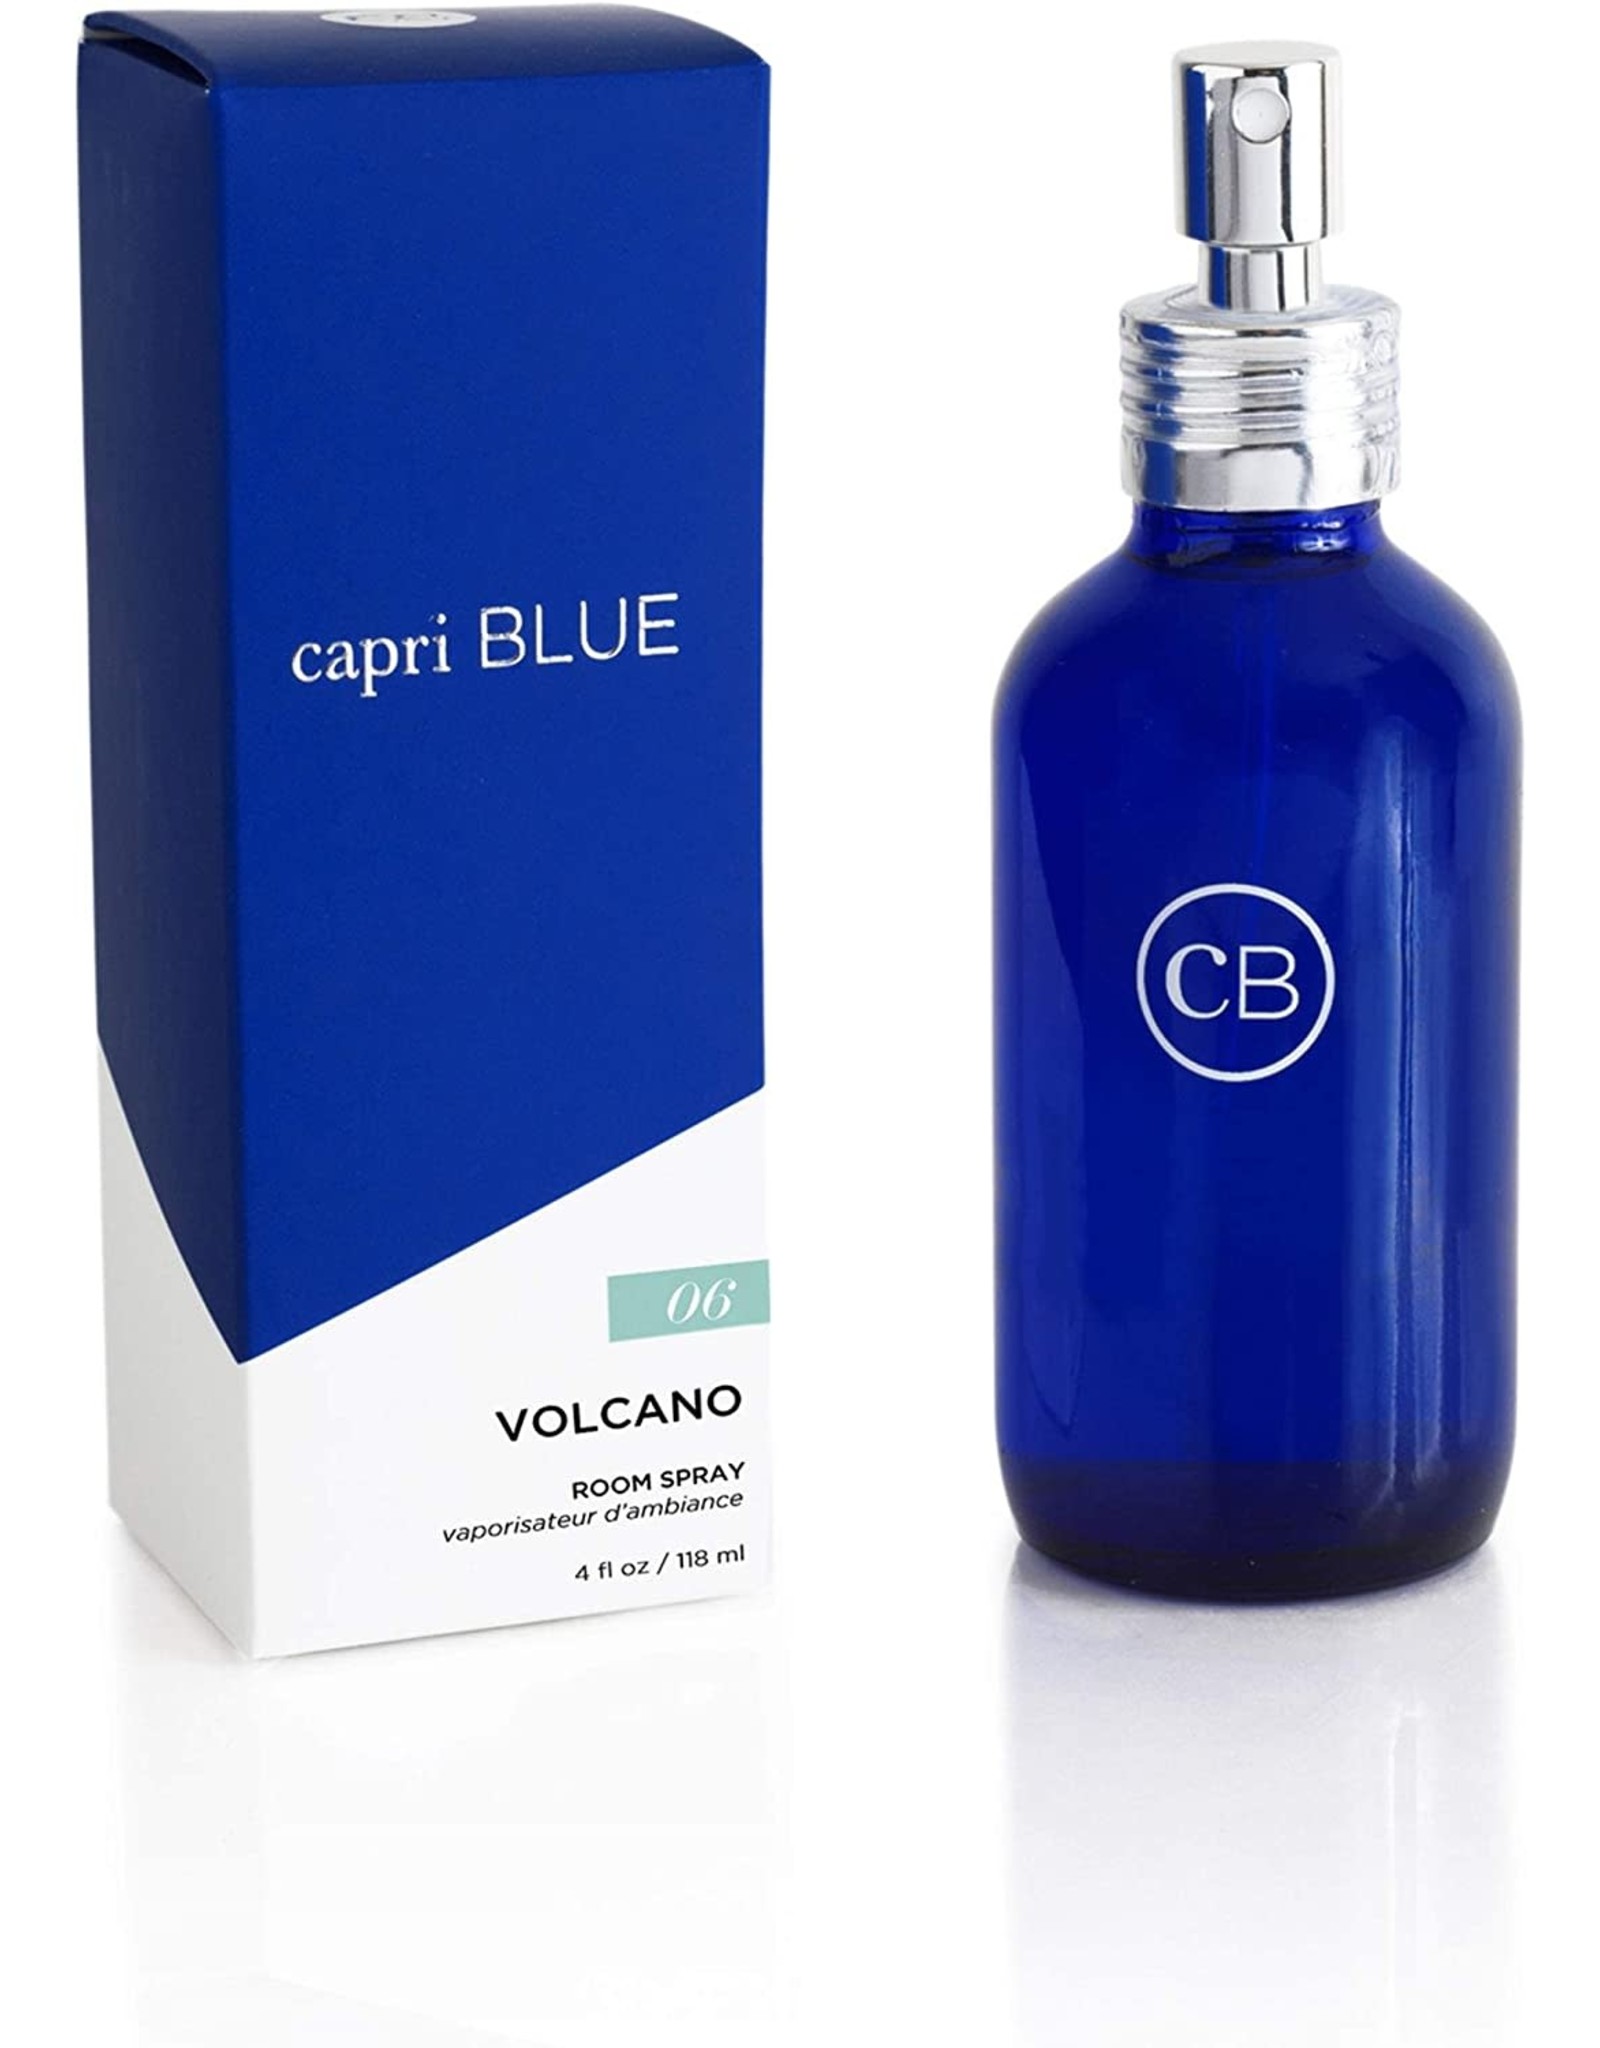 capri BLUE Volcano Room Spray 4 Oz Air Fresheners